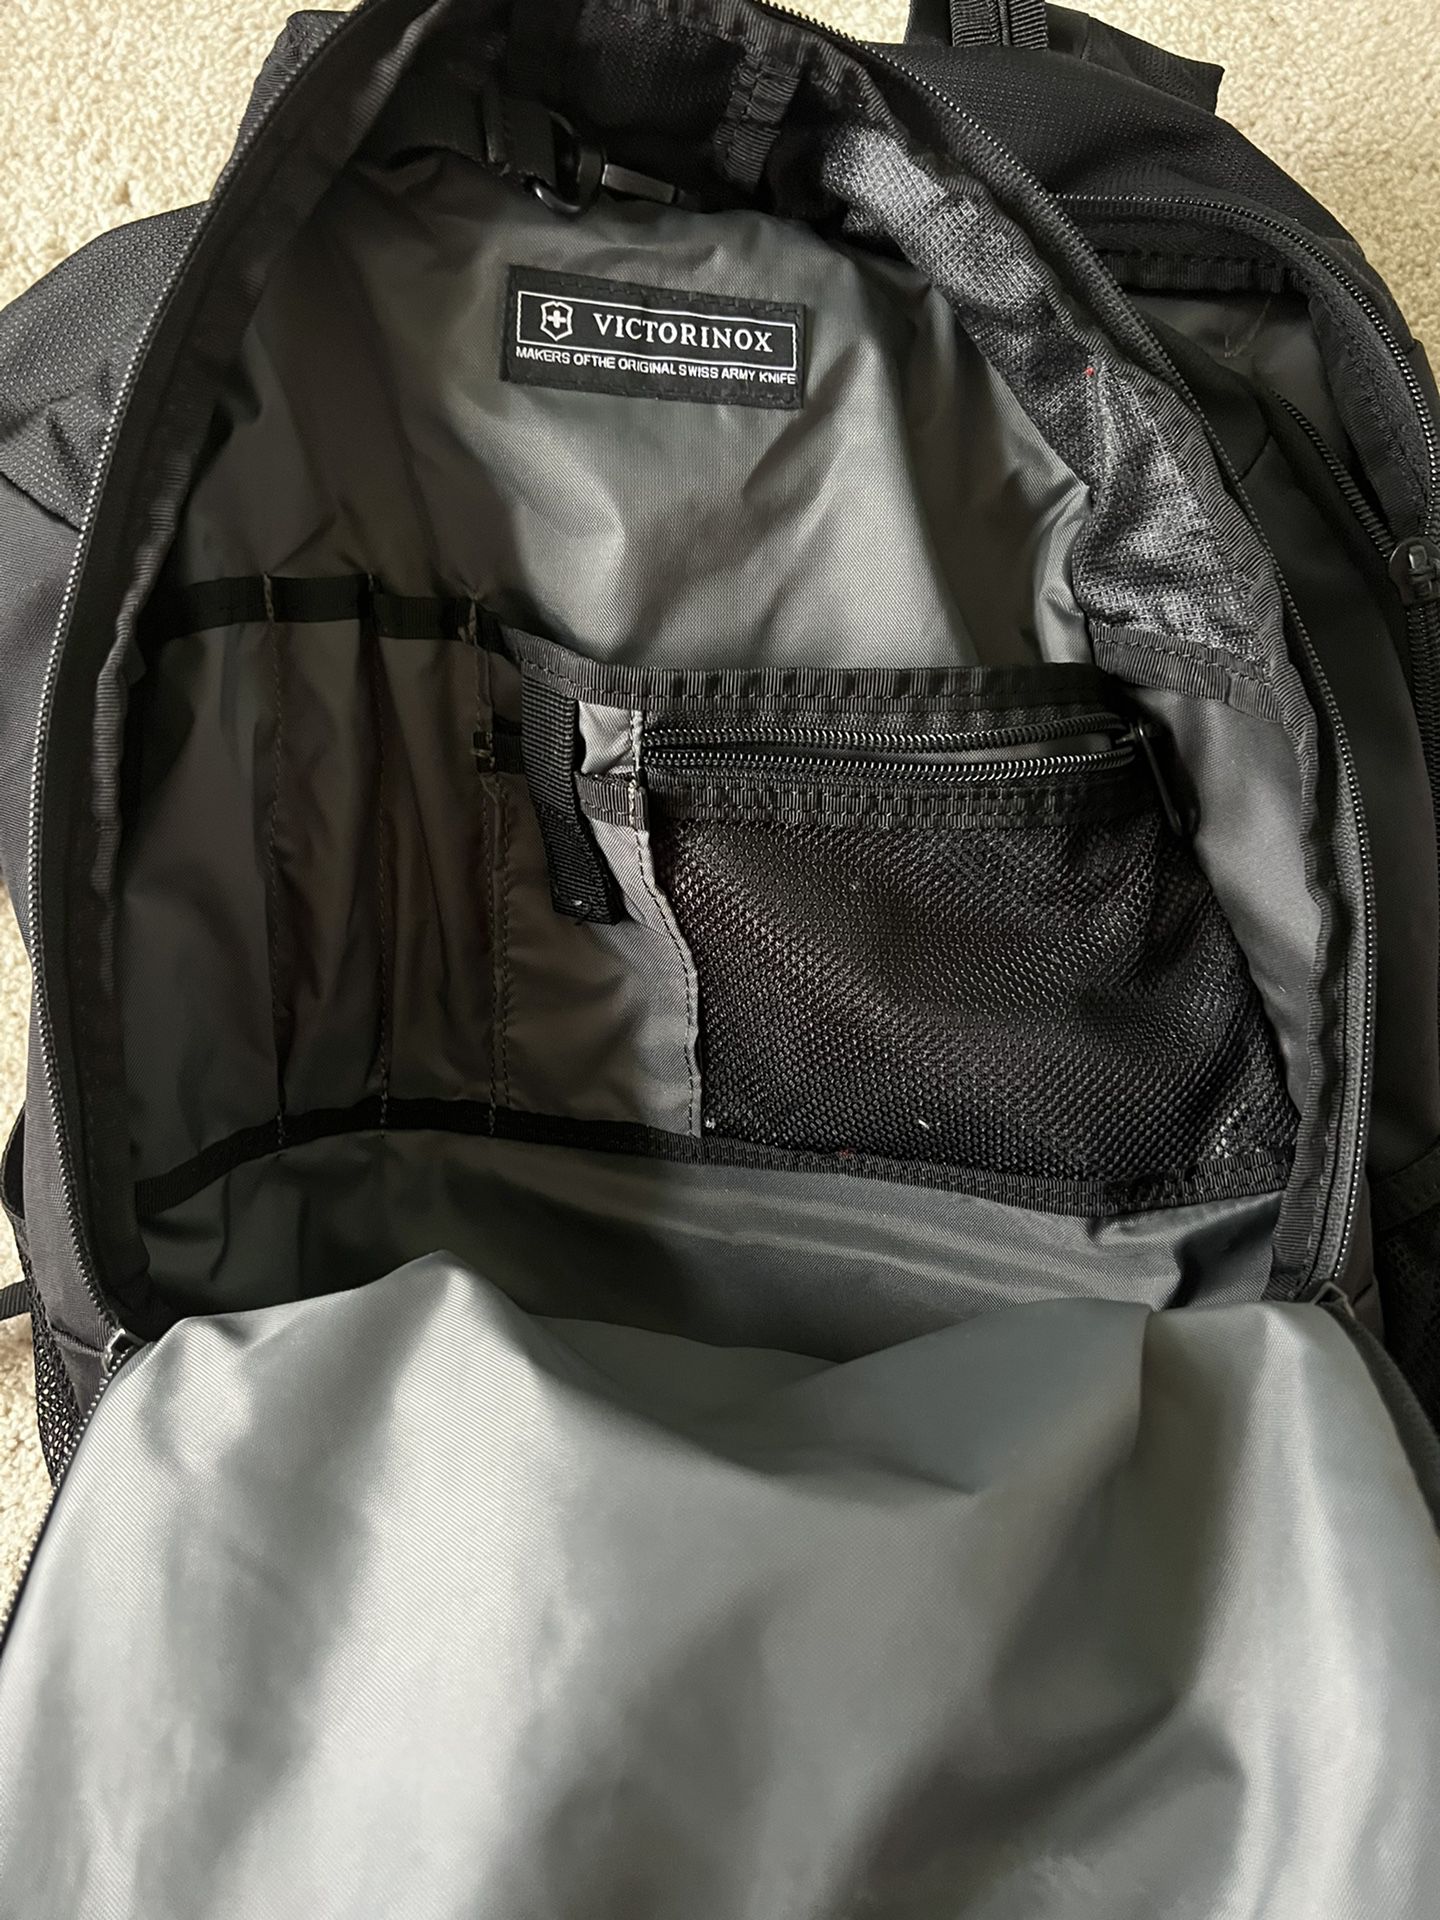 Victorinox Laptop Backpack